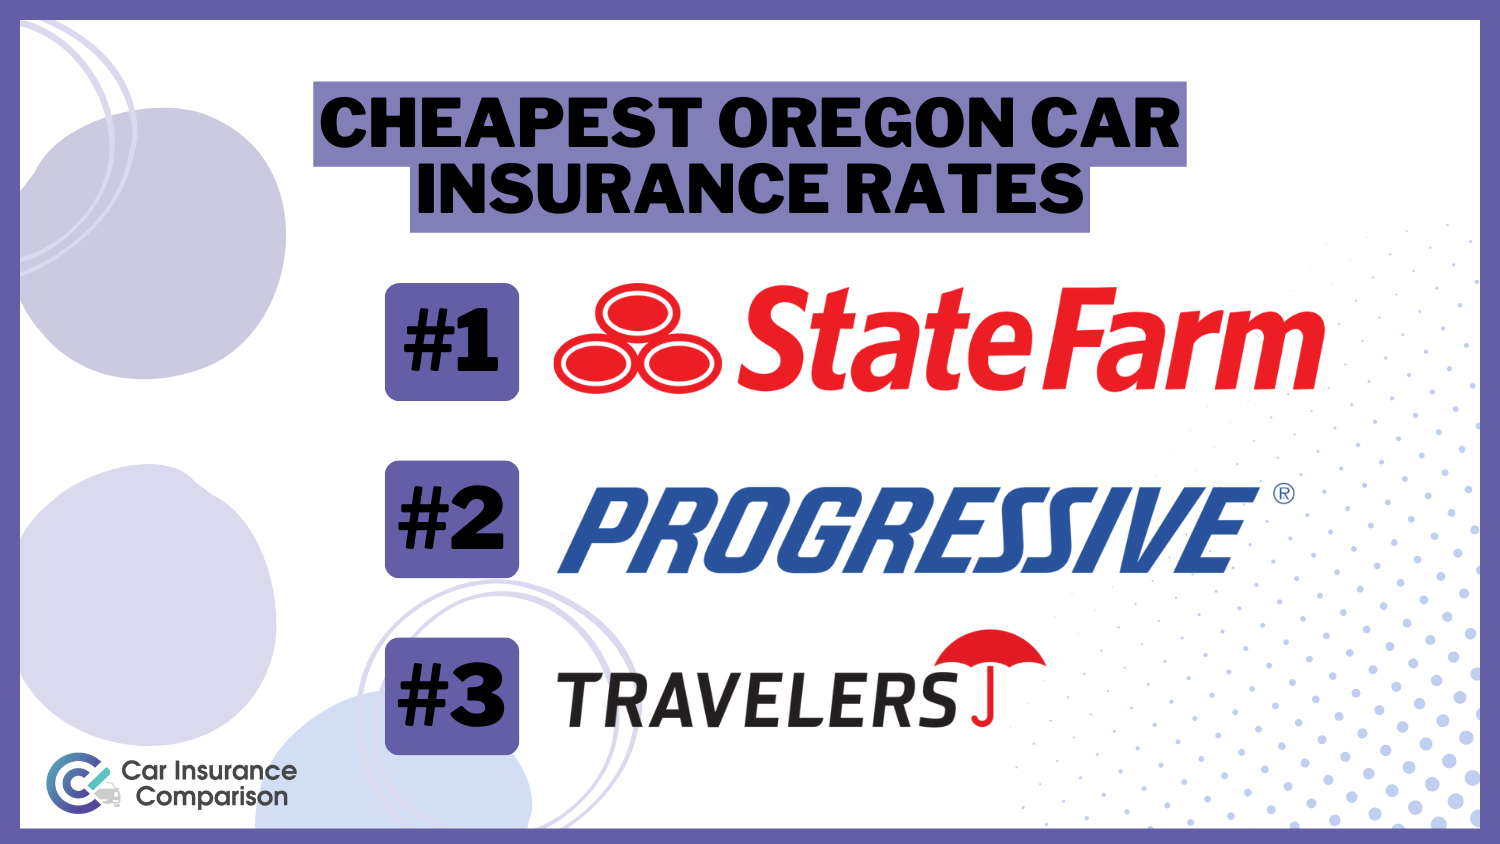 Cheapest Oregon Car Insurance Rates: State Farm, Progressive, Travelers